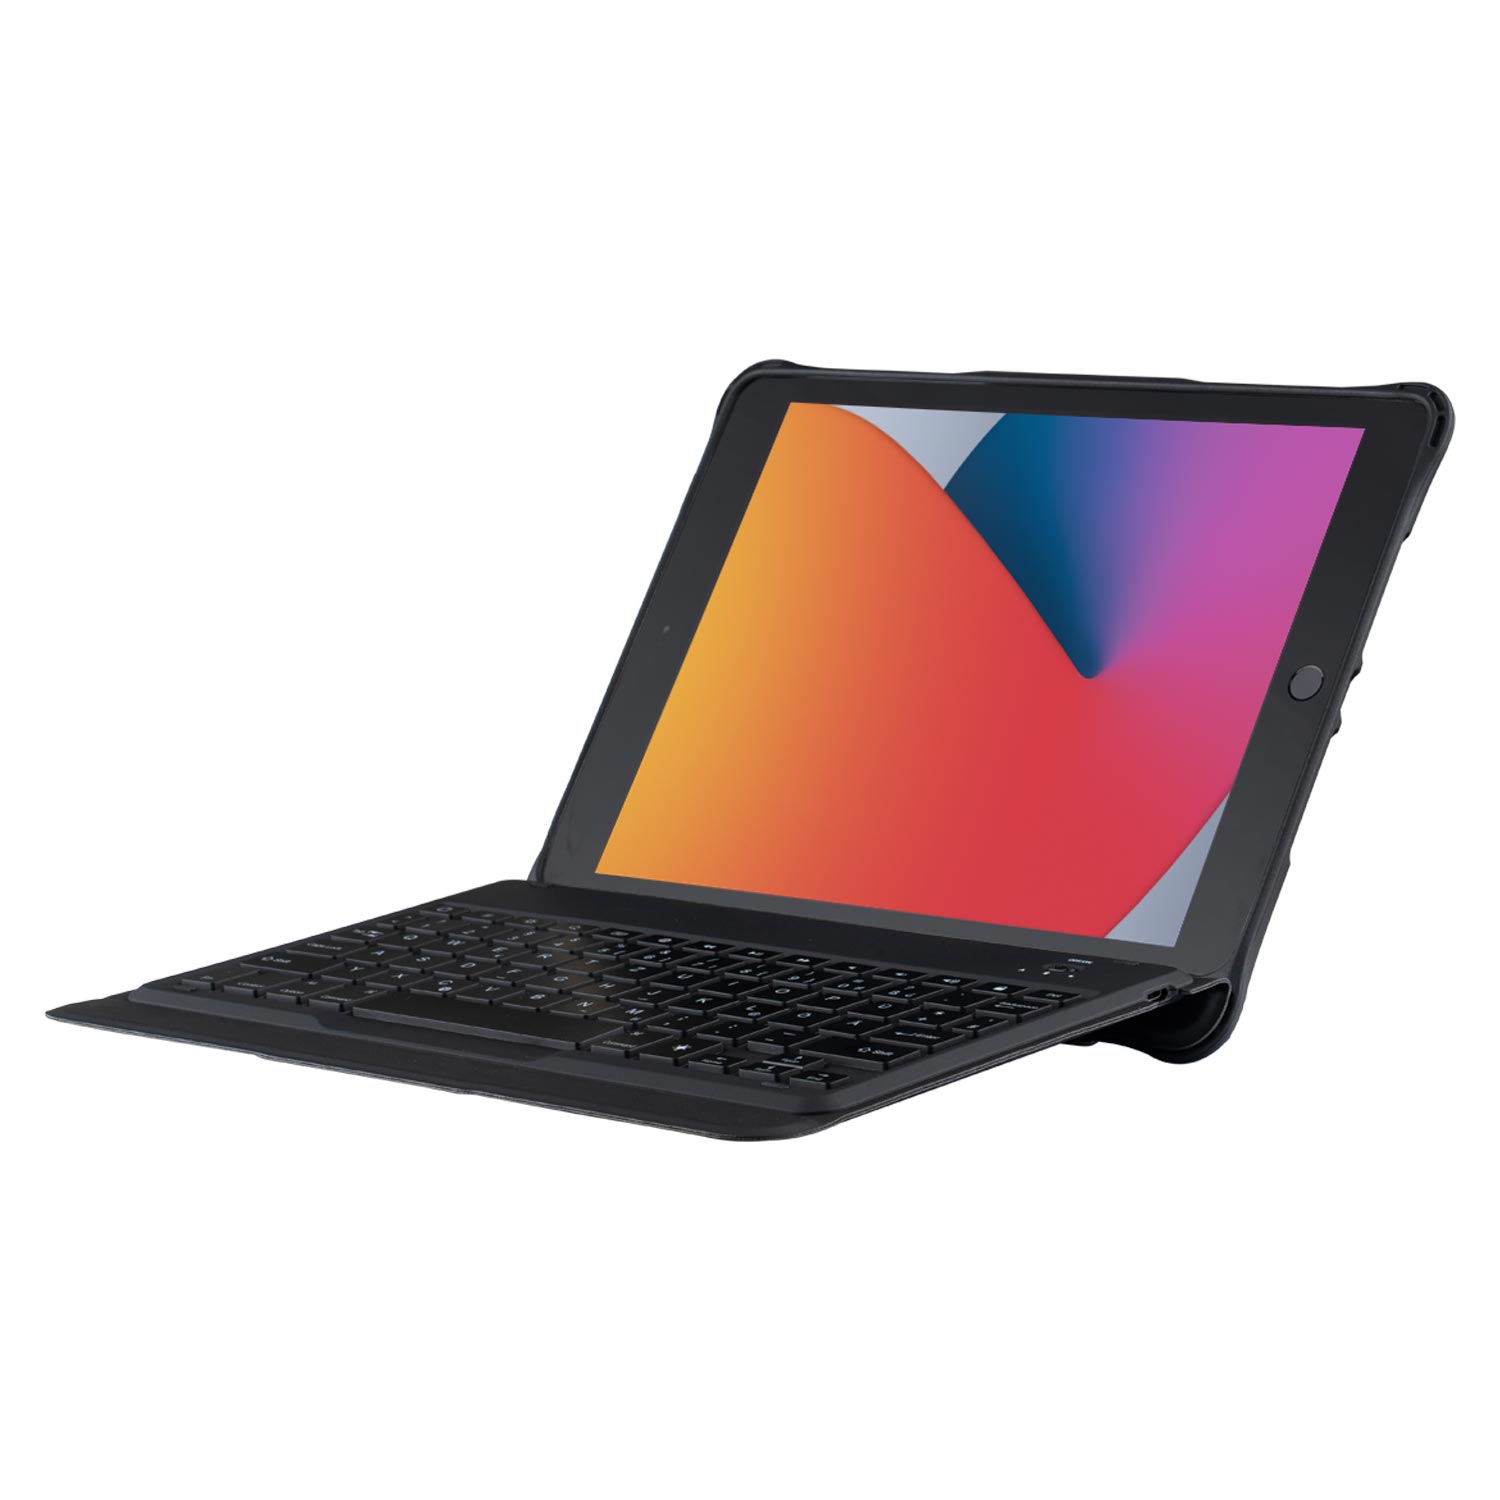 SHOCKGUARD Keyboard Folio iPad 10.2  schwarz EDU